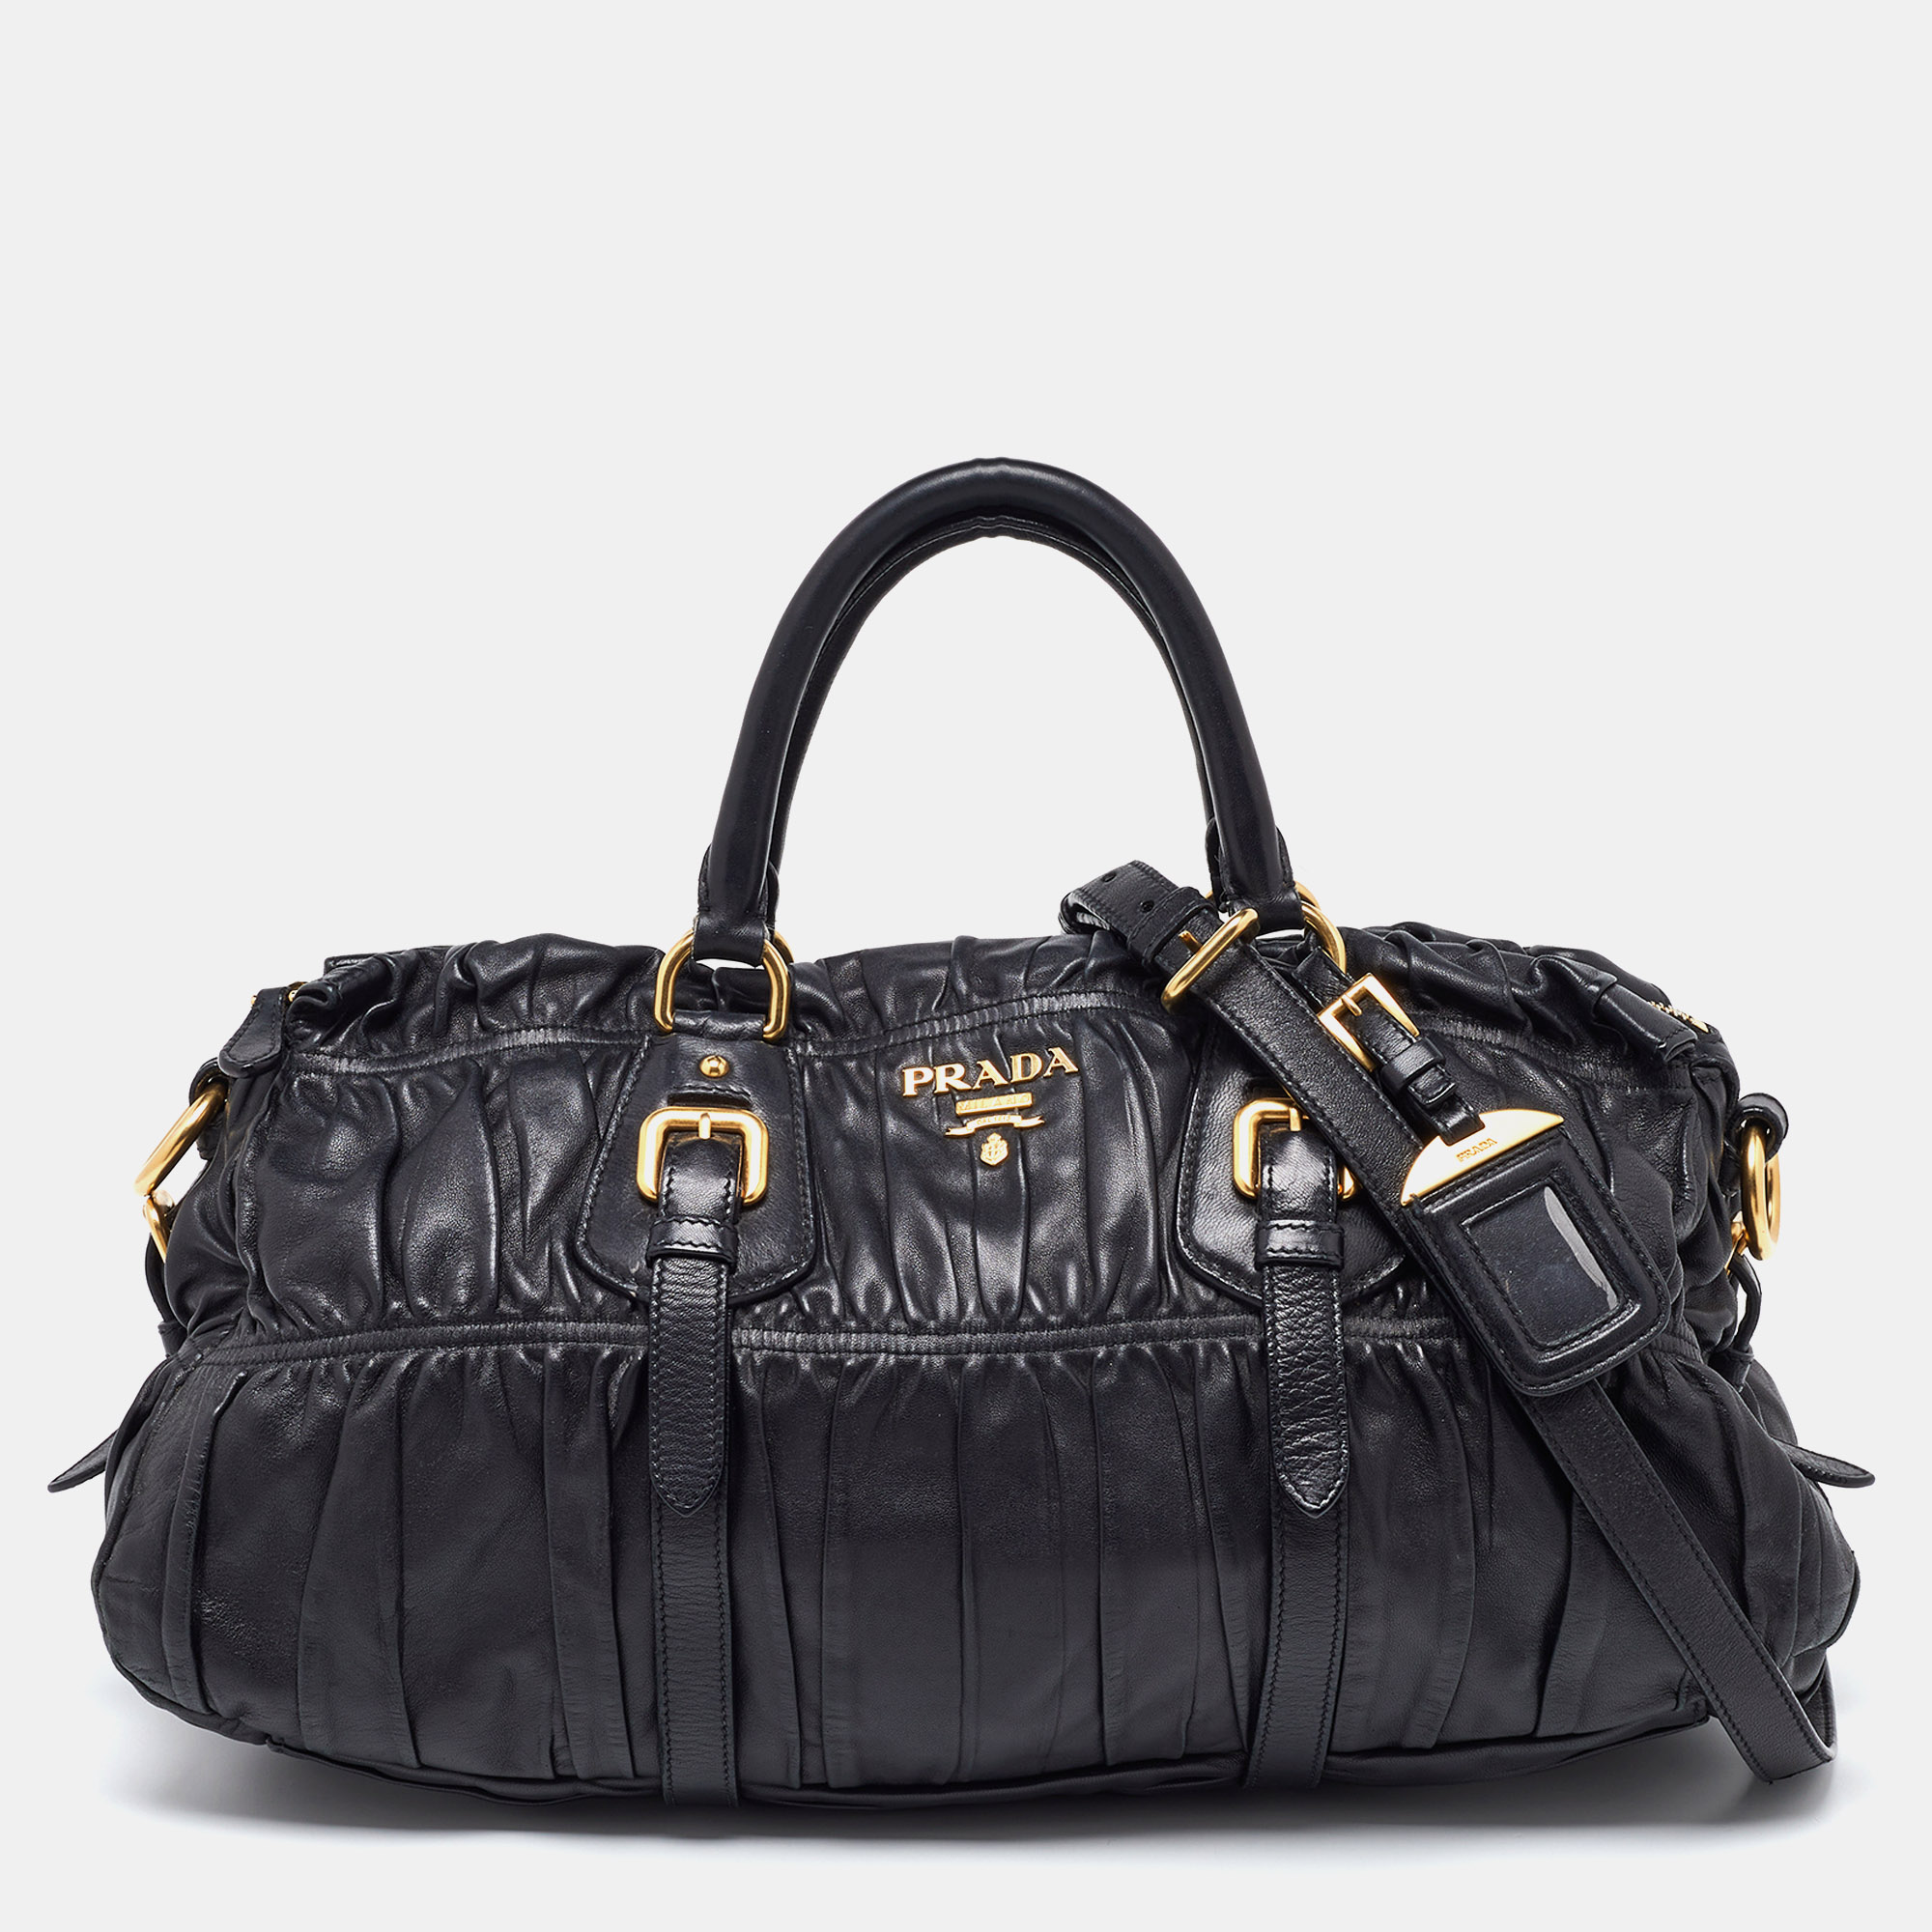 Prada black nappa gaufre leather buckle satchel